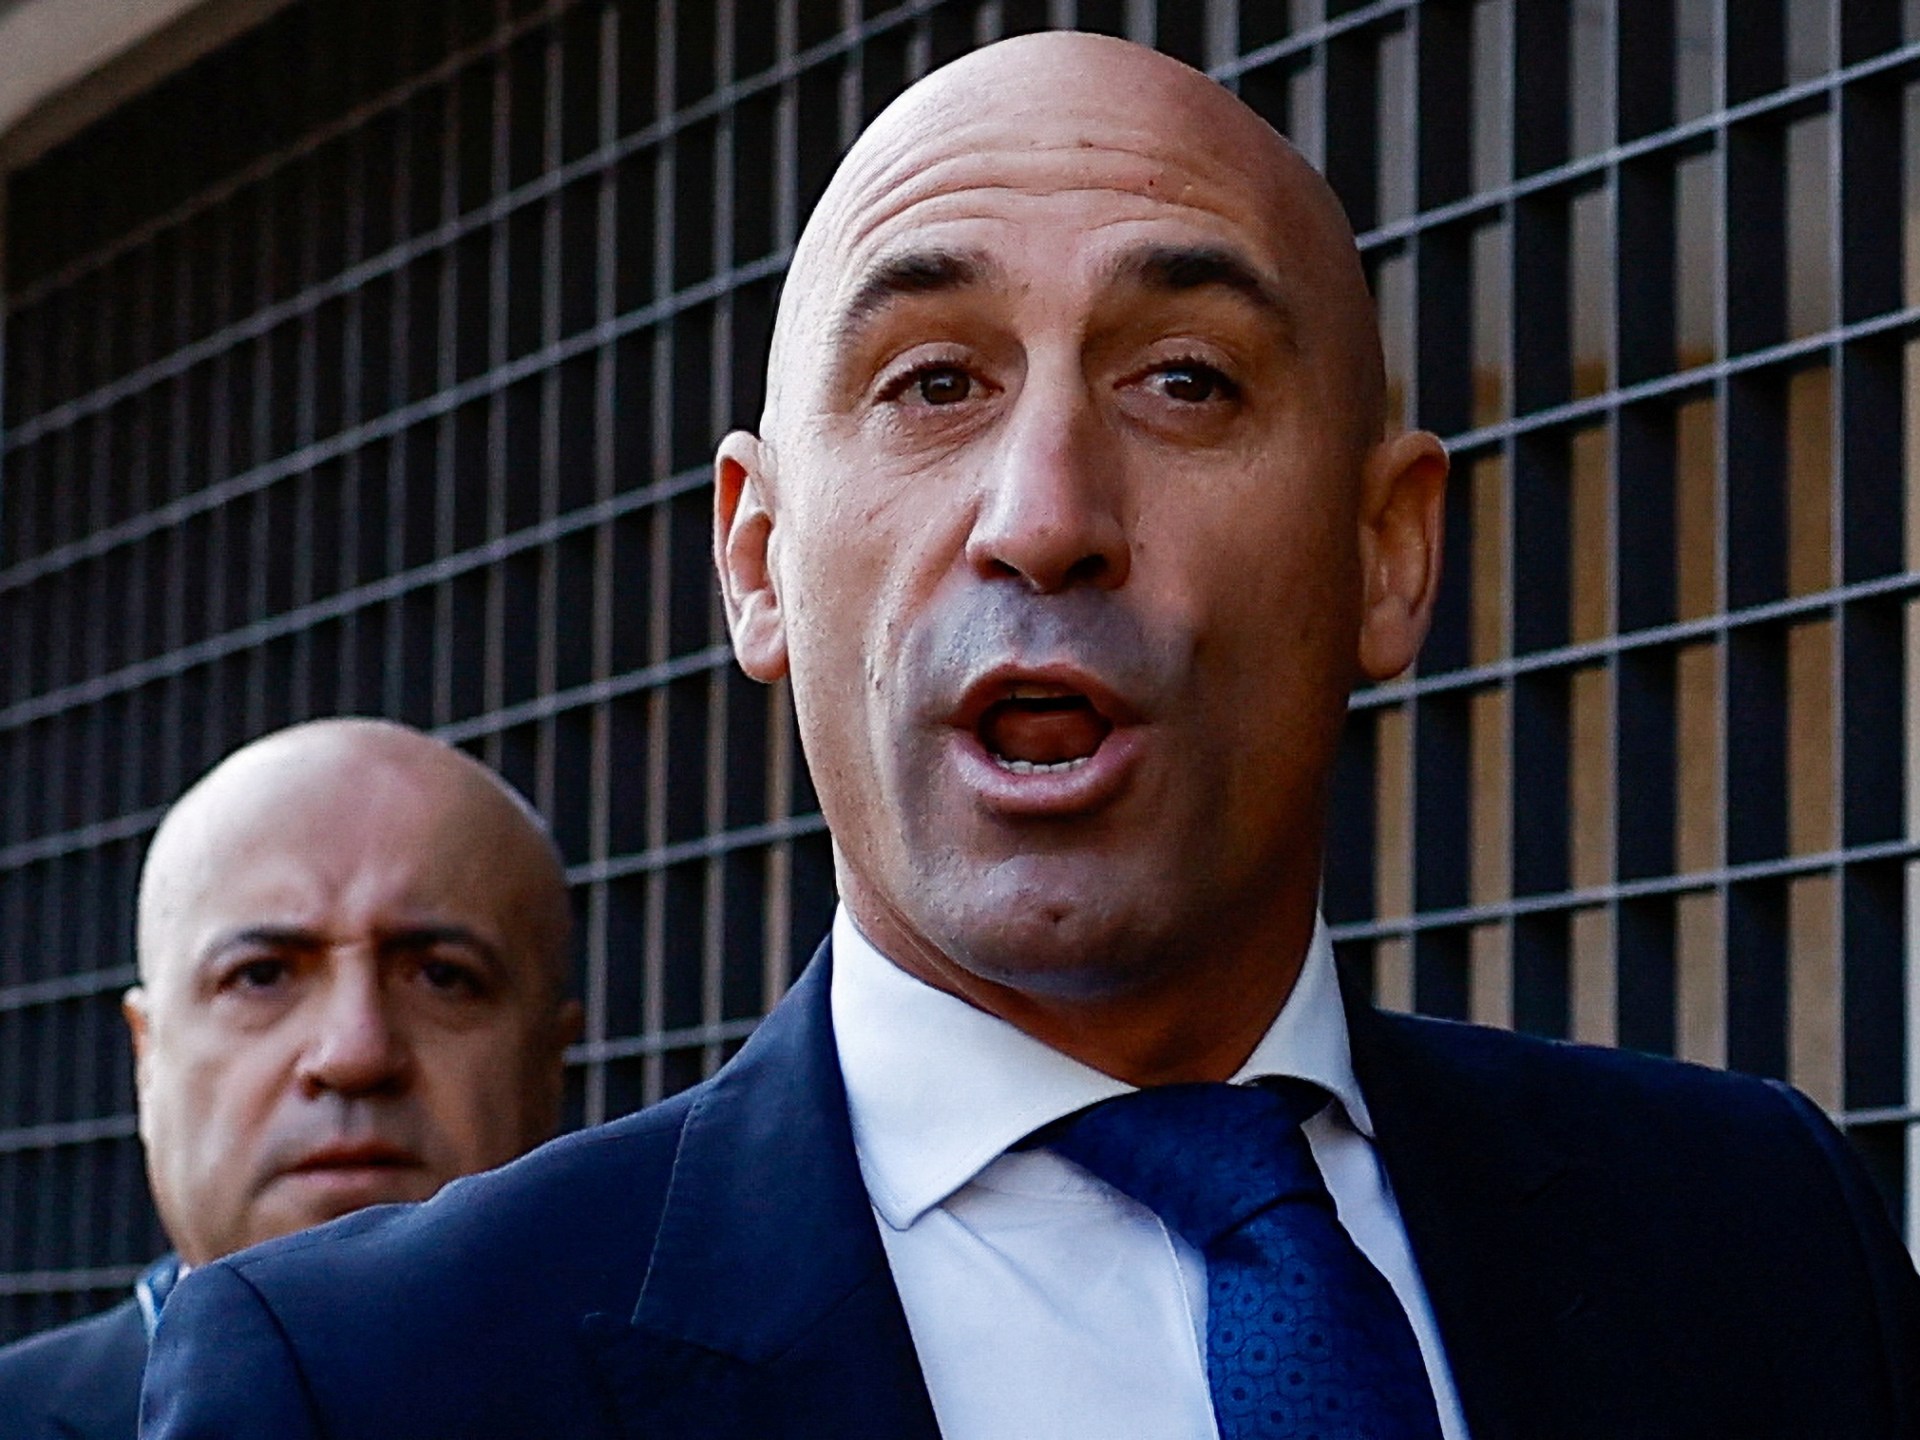 Luis Rubiales denies ‘irregularities’ in Spanish football corruption probe | Football News